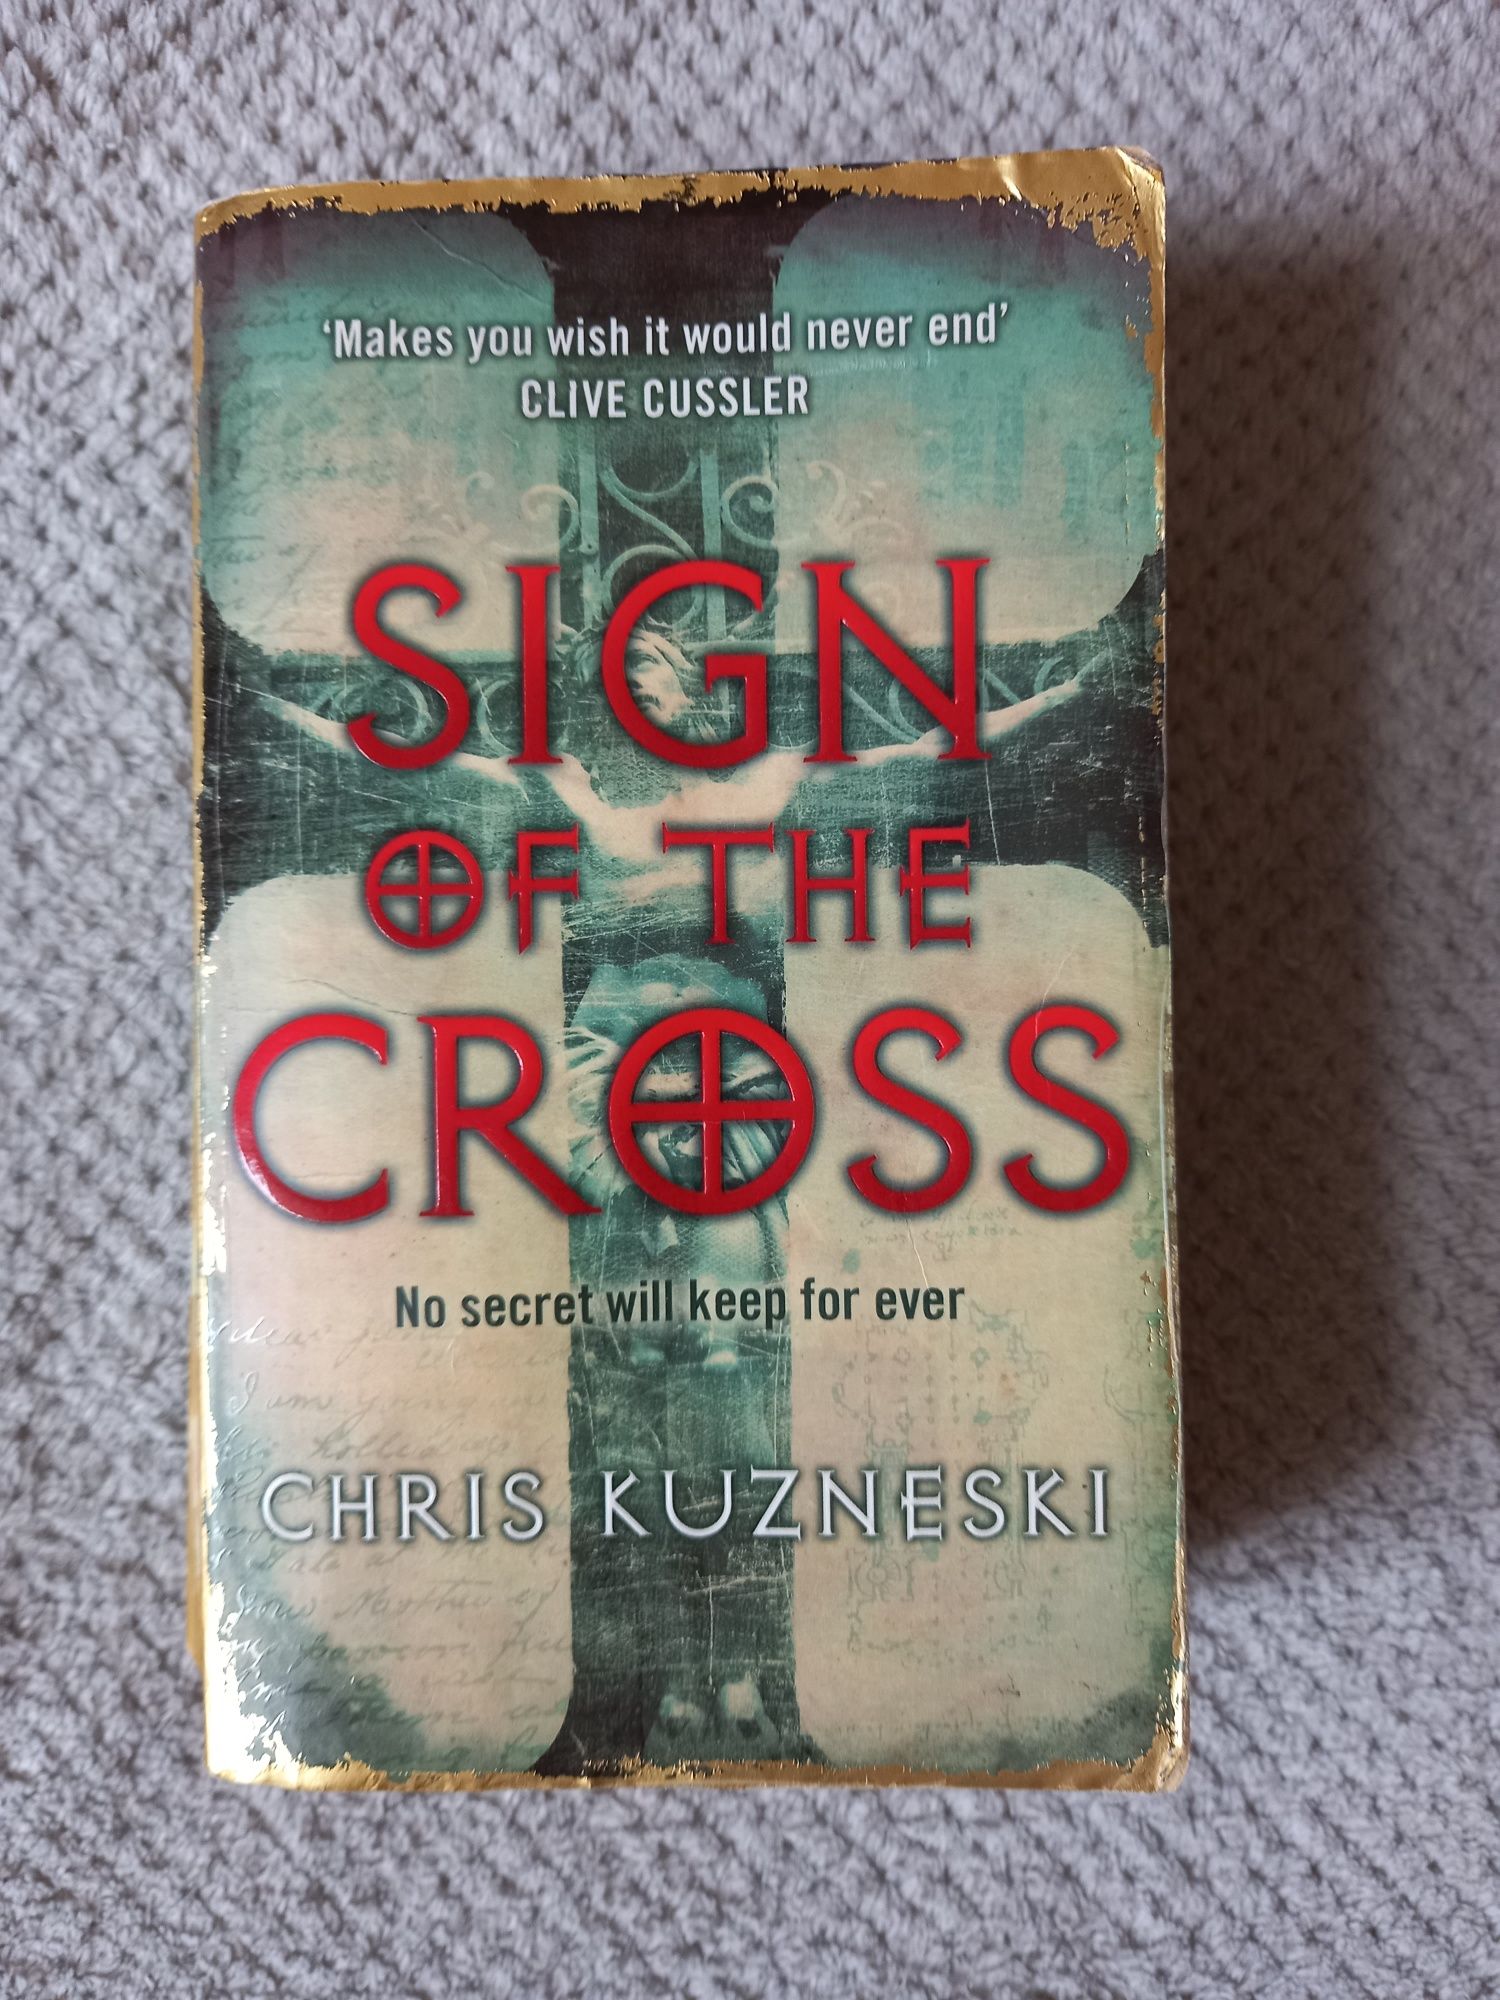 Sign of the Cross, Chris Kuzneski